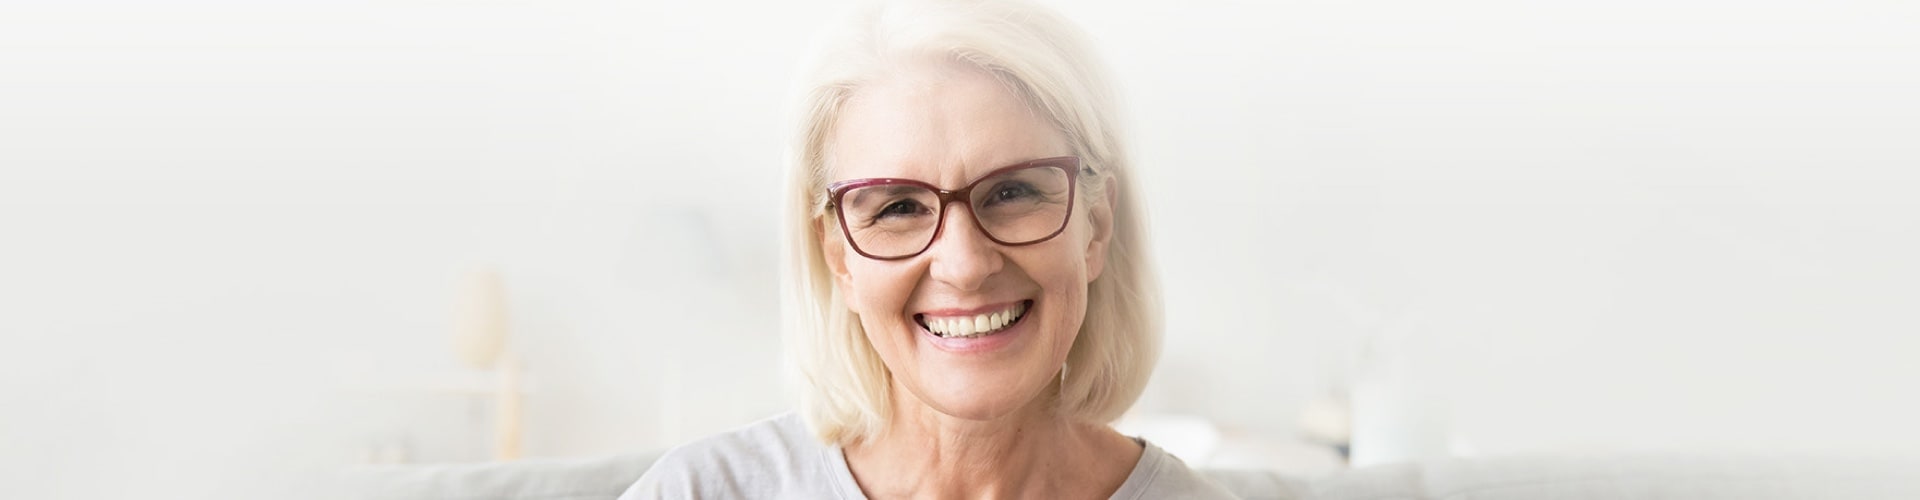 mature woman smiling wearing glasses